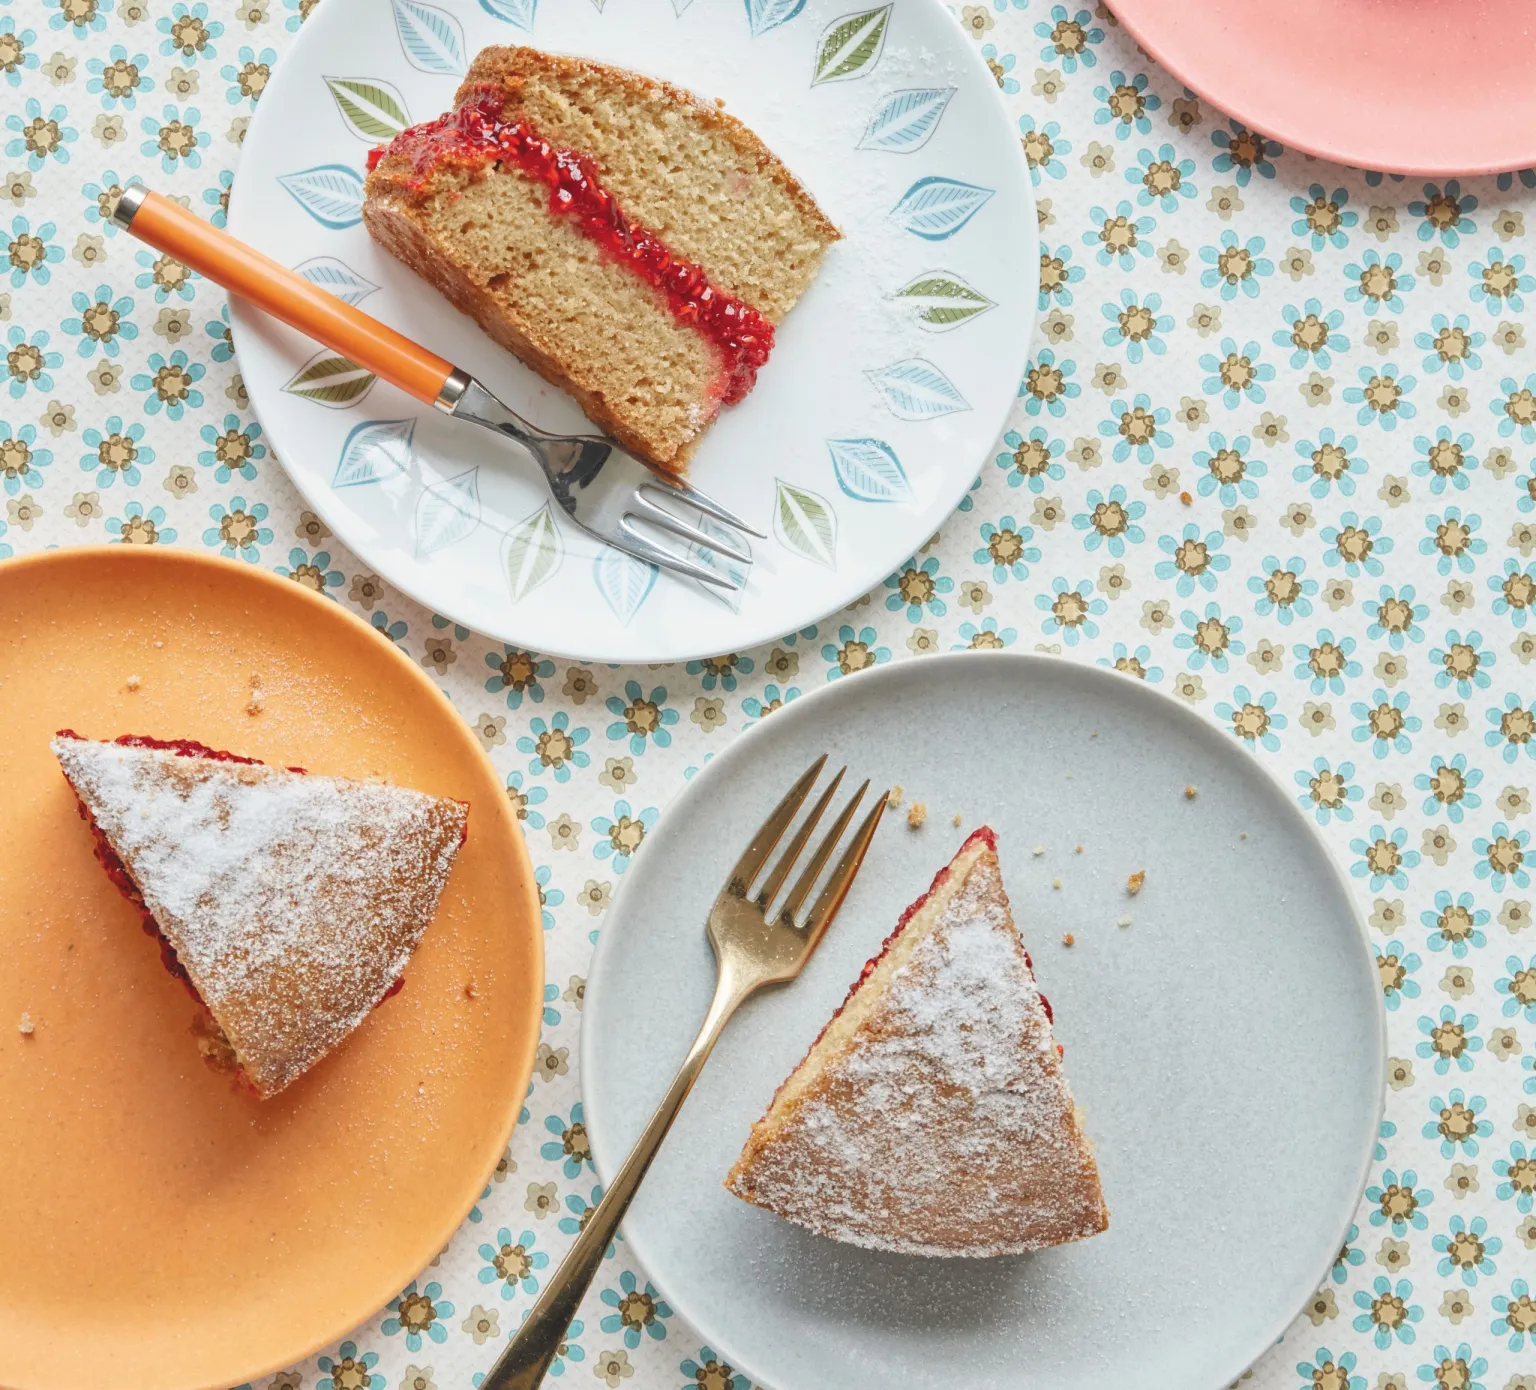 20220303_freya_victoriasponge-1-scaled-1.webp Daily Top Recipes: From Carrot Cardamom Cake to Victorian Sponge Cake!